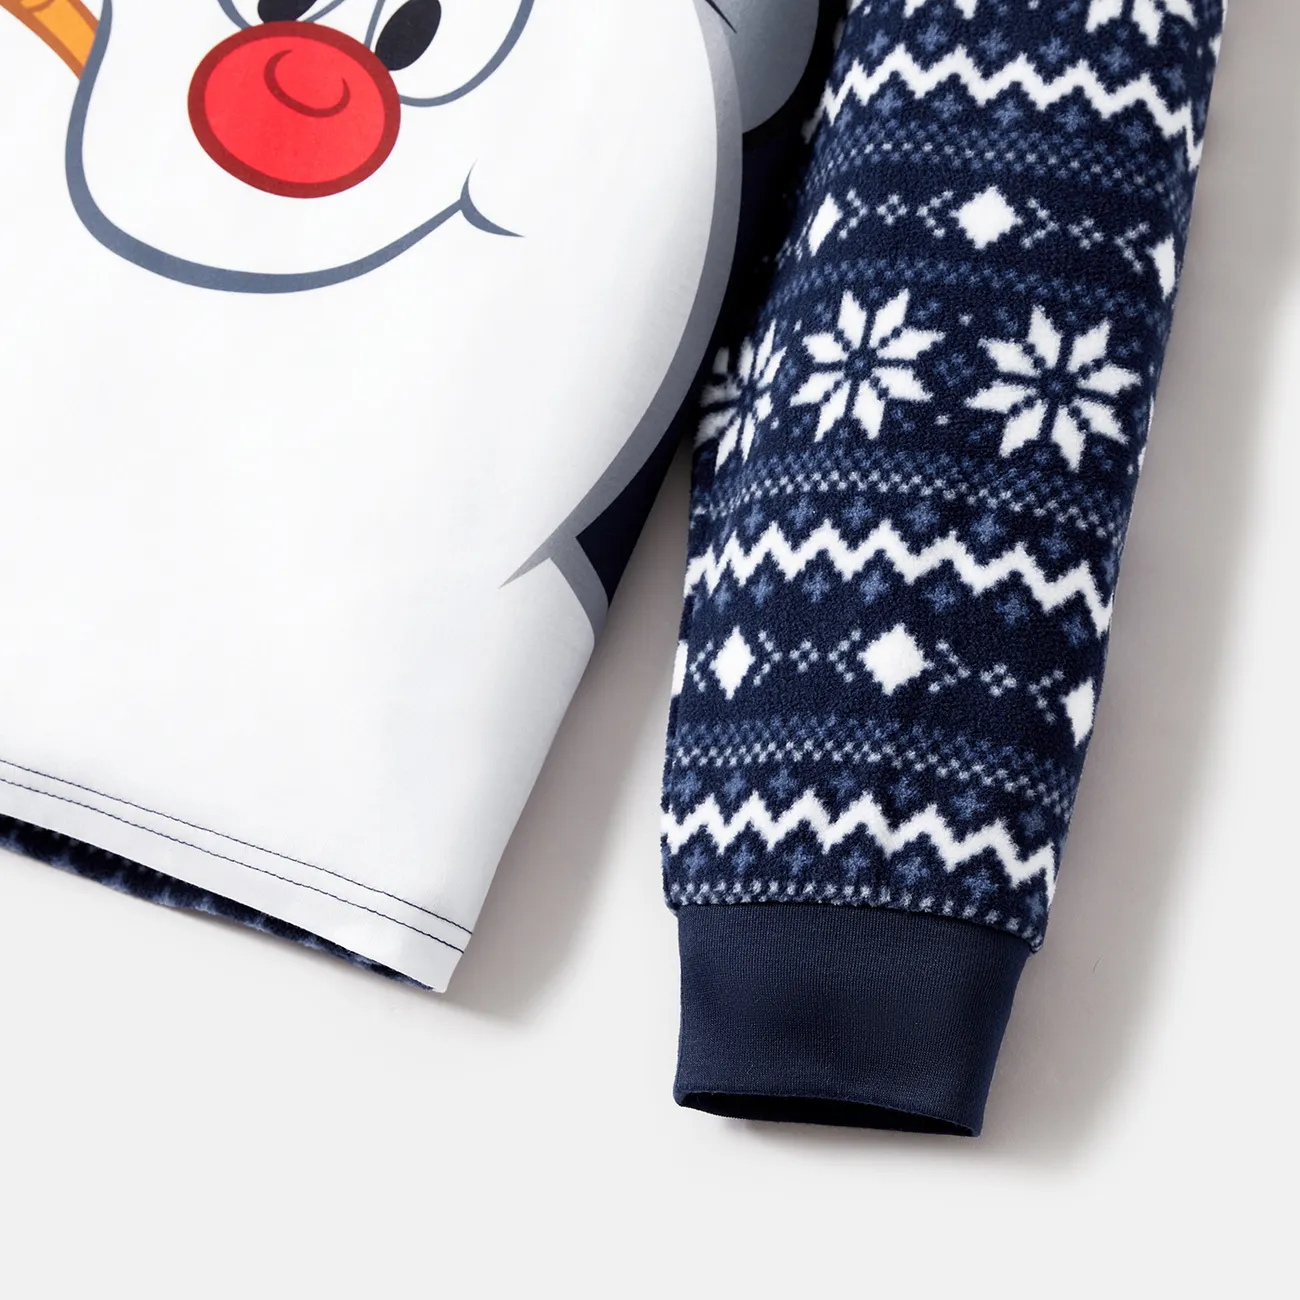 Frosty The Snowman 聖誕節 全家裝 長袖 親子裝 睡衣 (Flame Resistant) 淺藍 big image 1